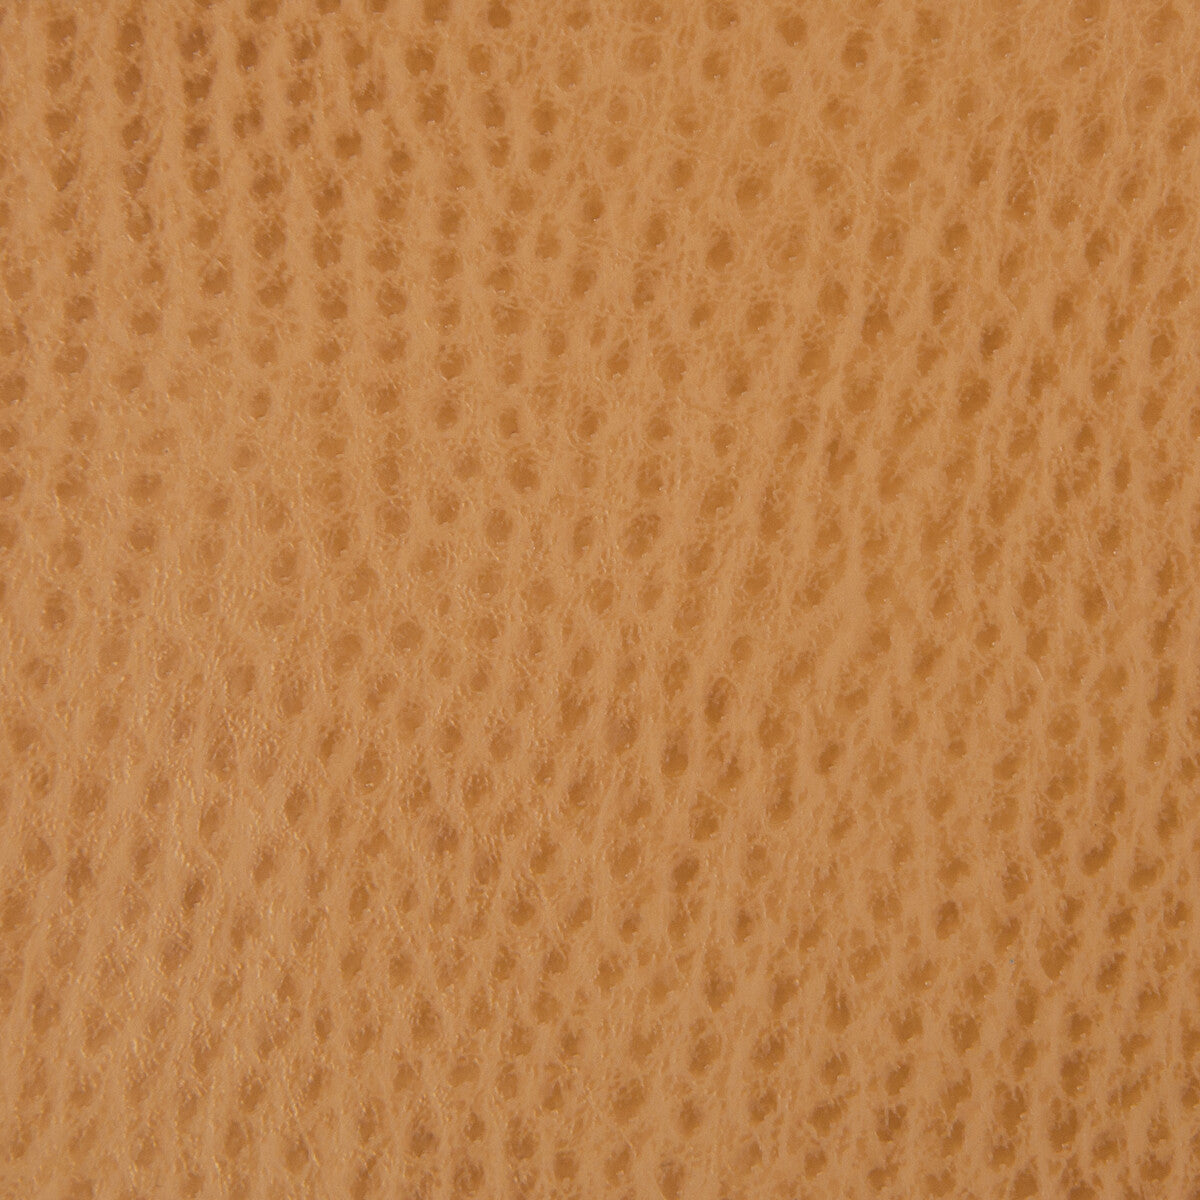 Kravet Contract fabric in belus-4 color - pattern BELUS.4.0 - by Kravet Contract